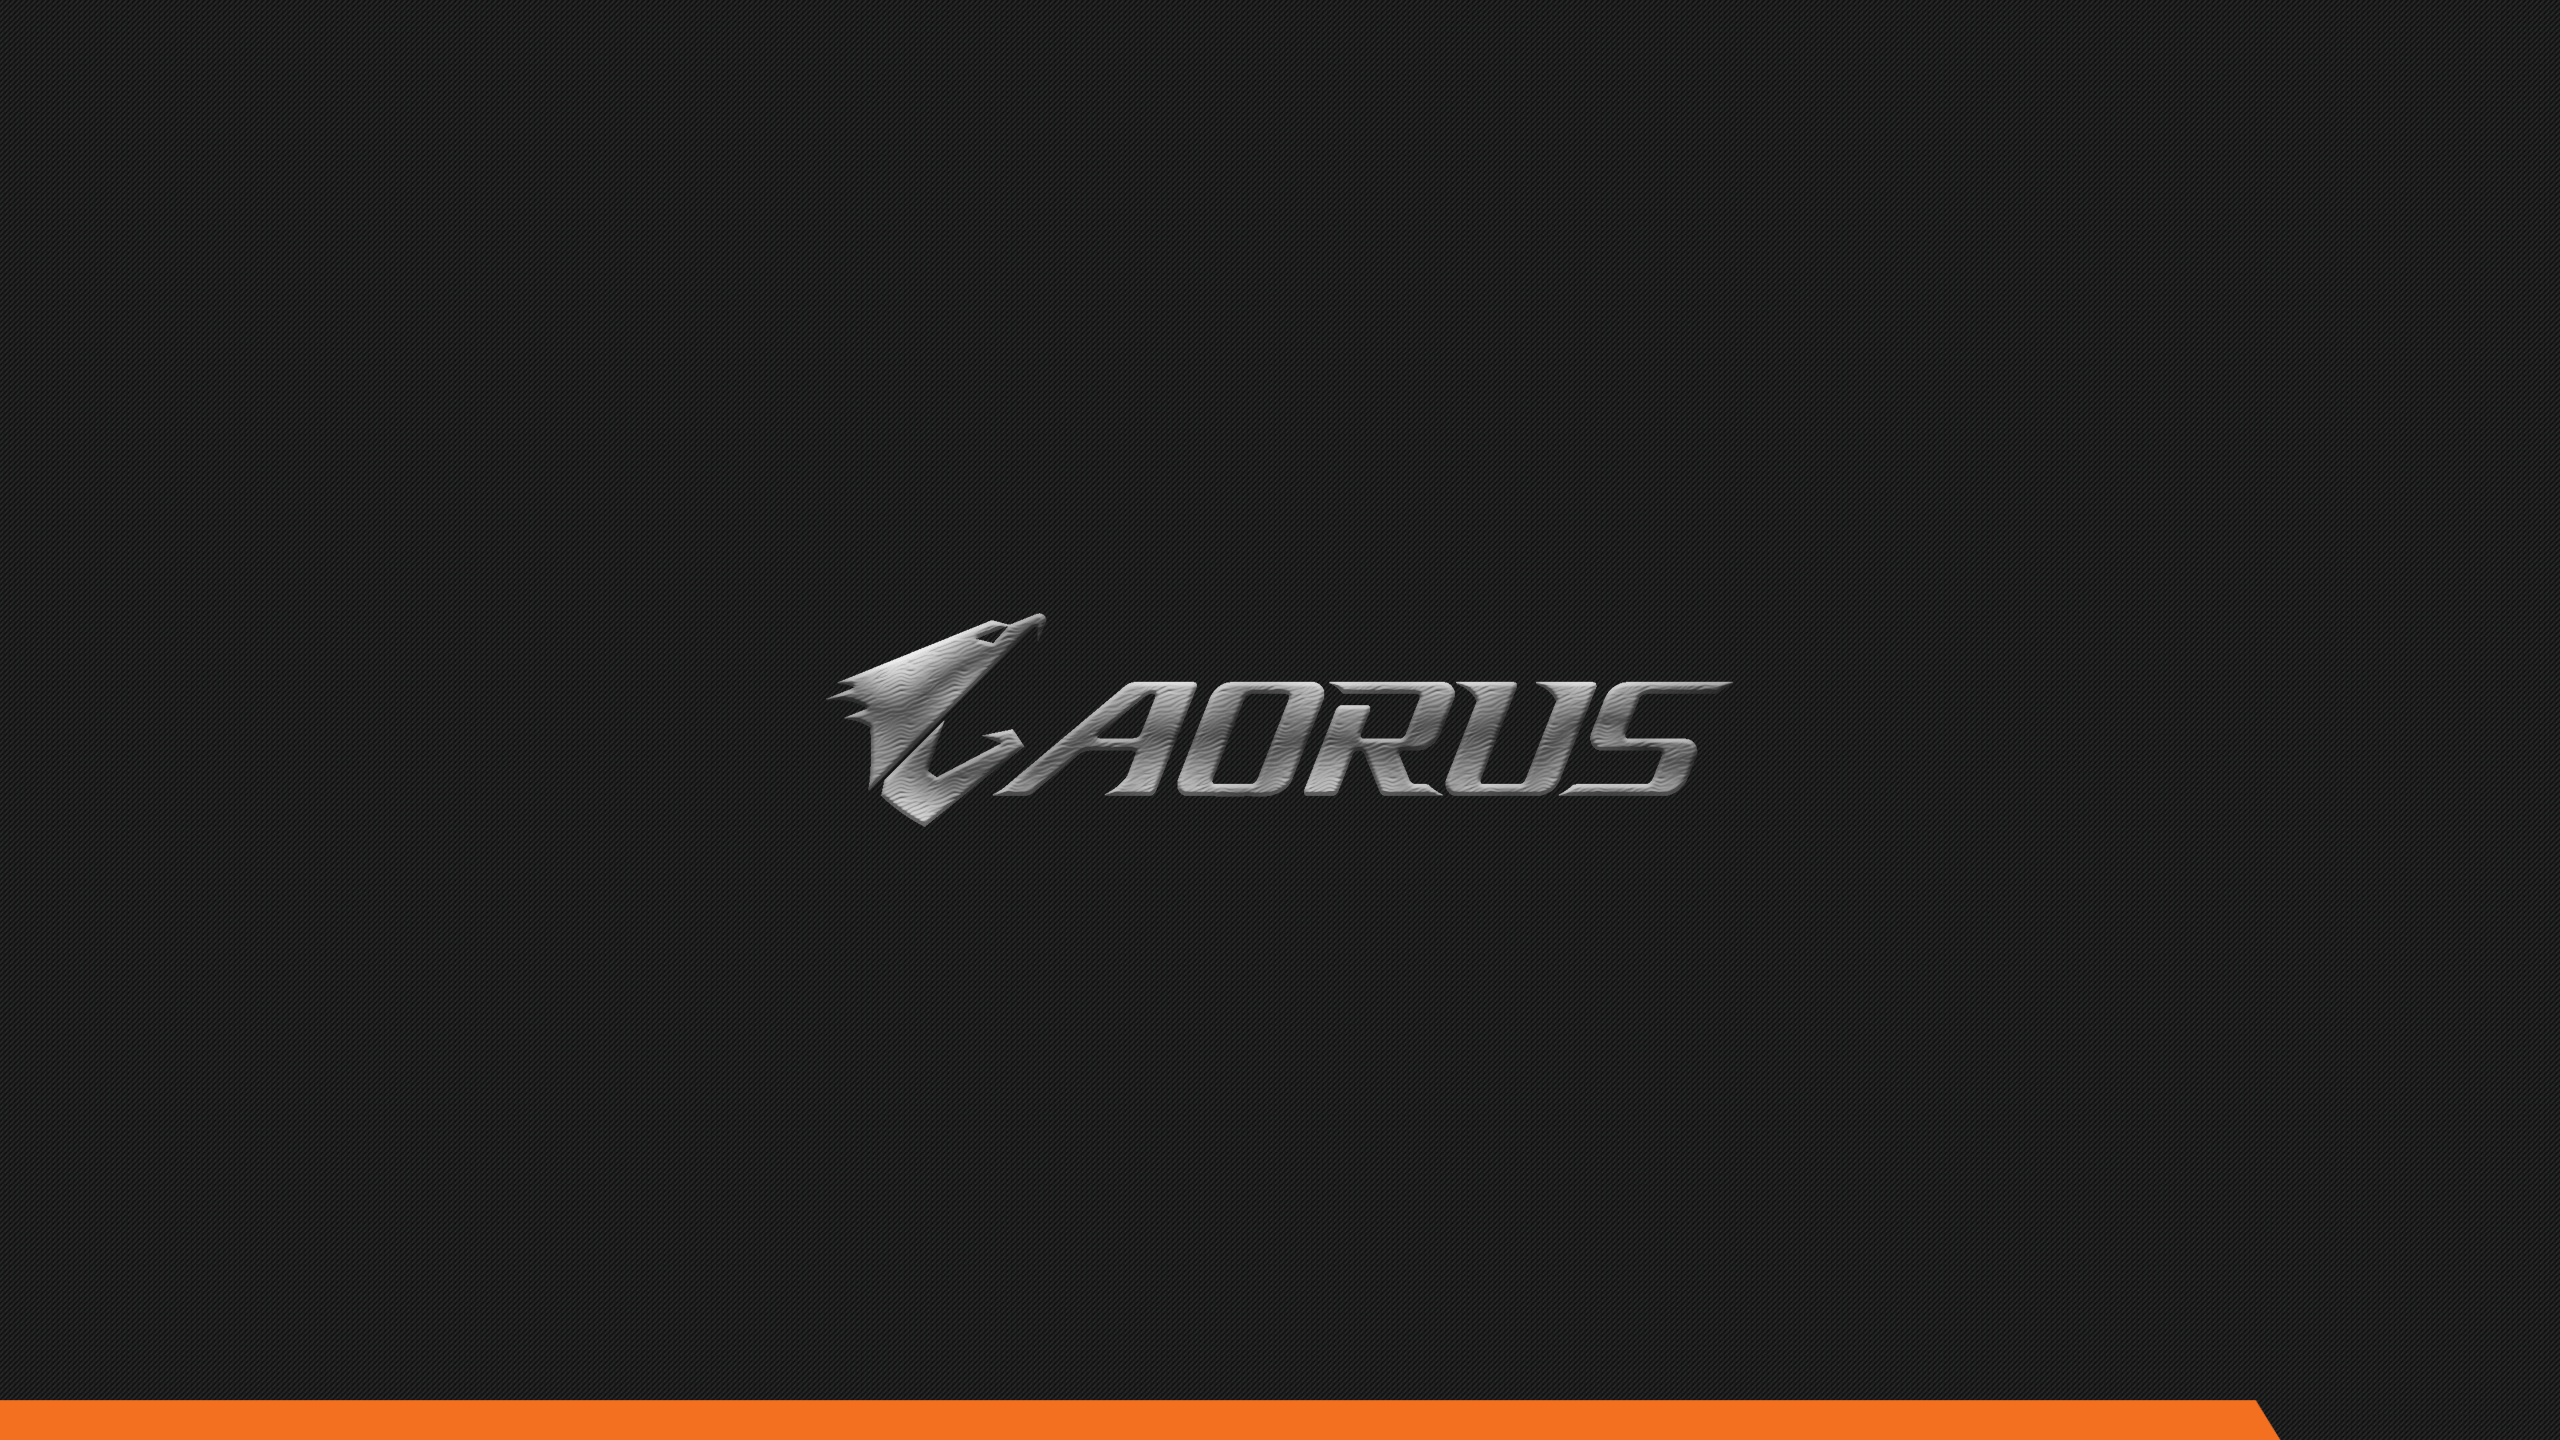 Wallpaper ID: 103195 / Gigabyte, Aorus, logo, PC gaming, technology, simple  background, black, dark, black background, orange Wallpaper